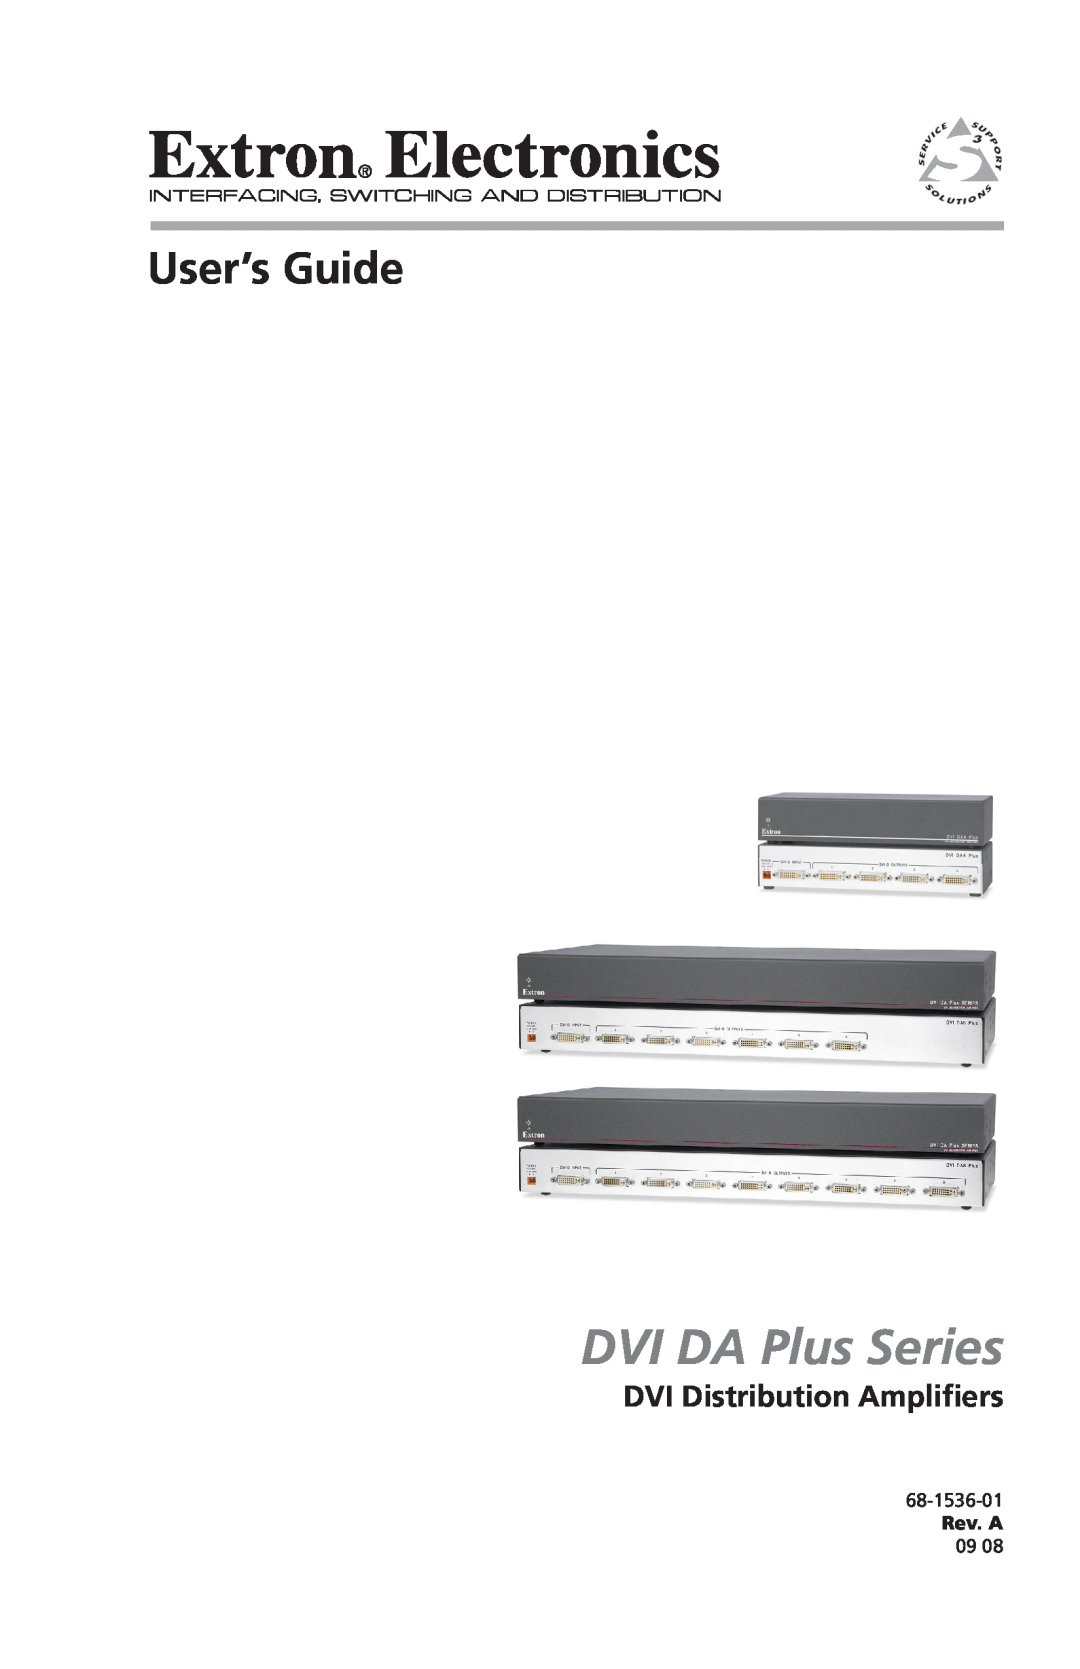 Extron electronic DVI DA8 Plus manual DVI Distribution Amplifiers, DVI DA Plus Series, User’s Guide, 68-1536-01, Rev. A 